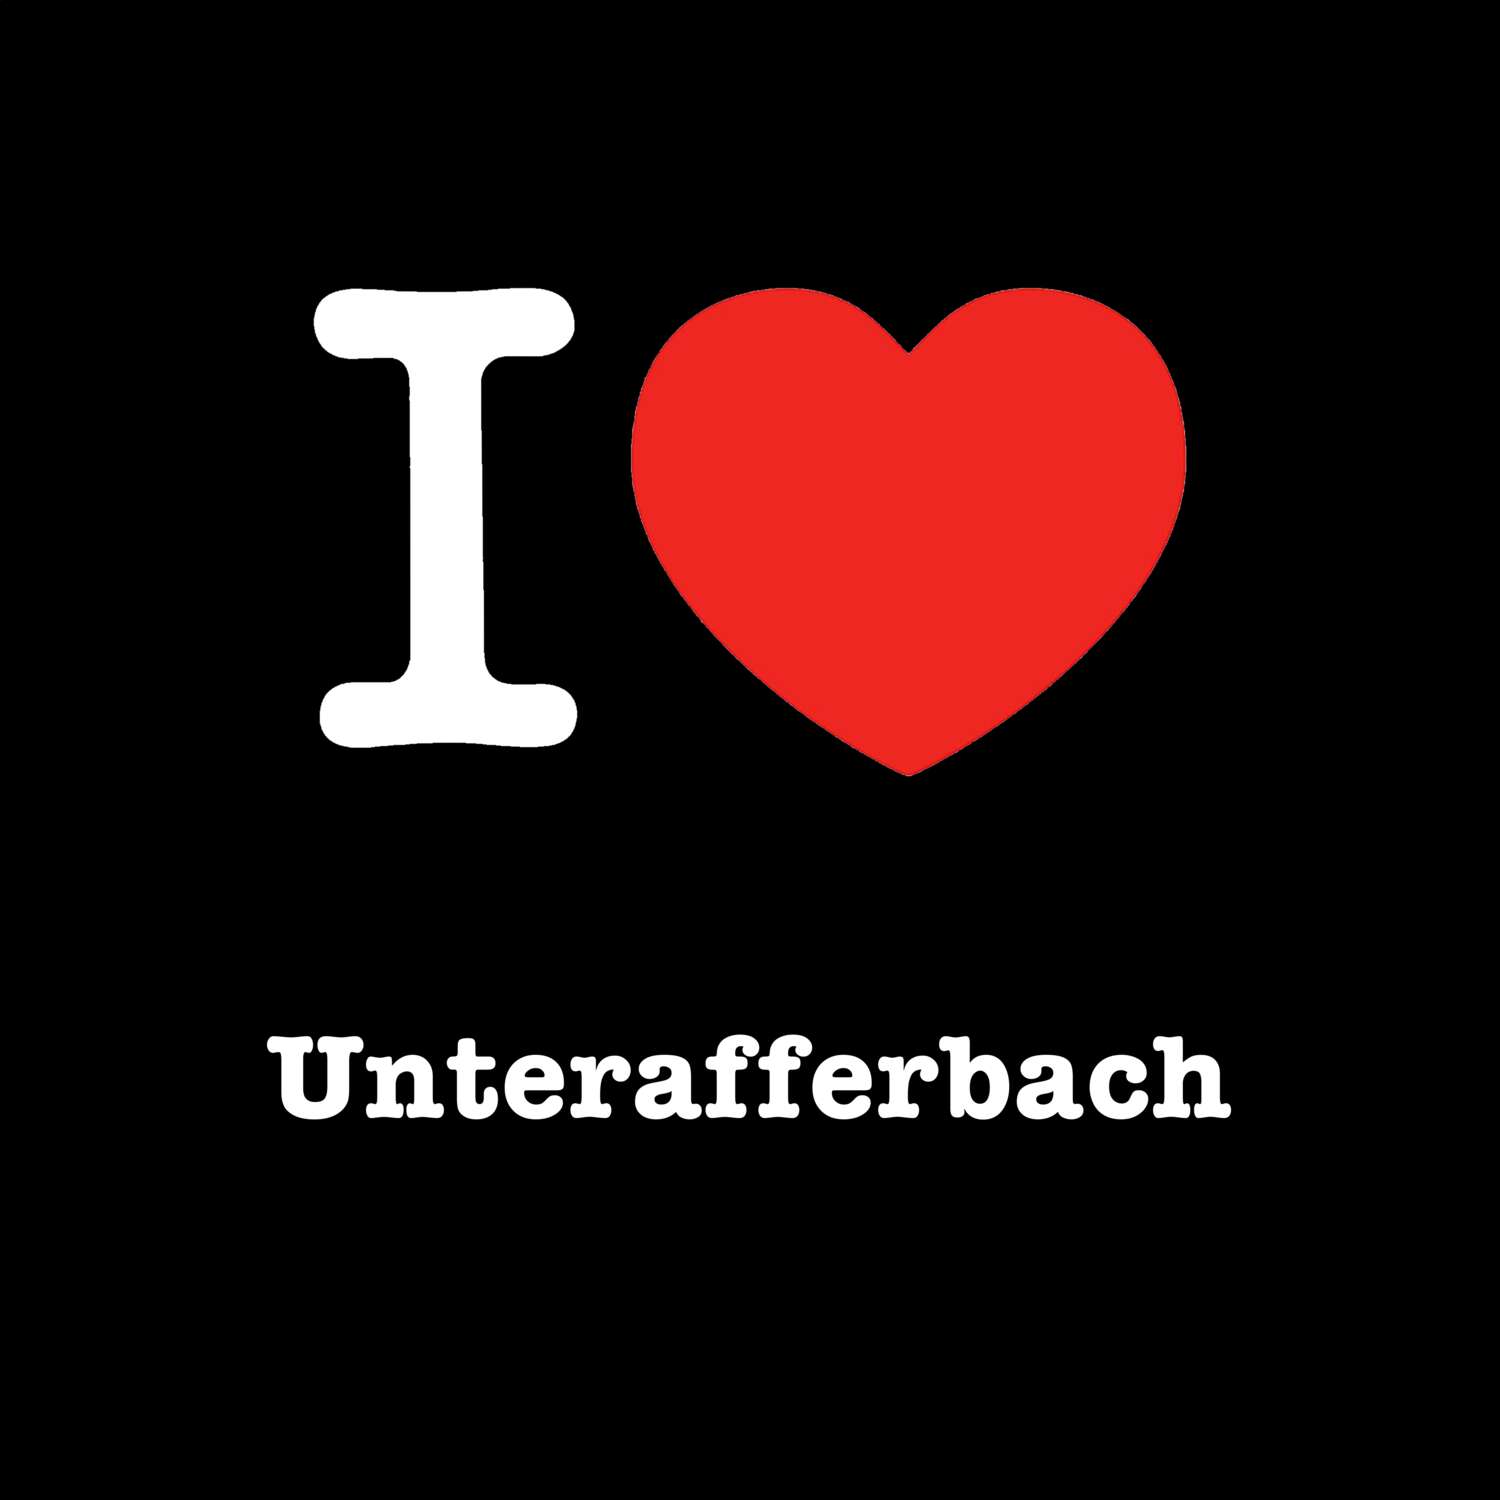 Unterafferbach T-Shirt »I love«